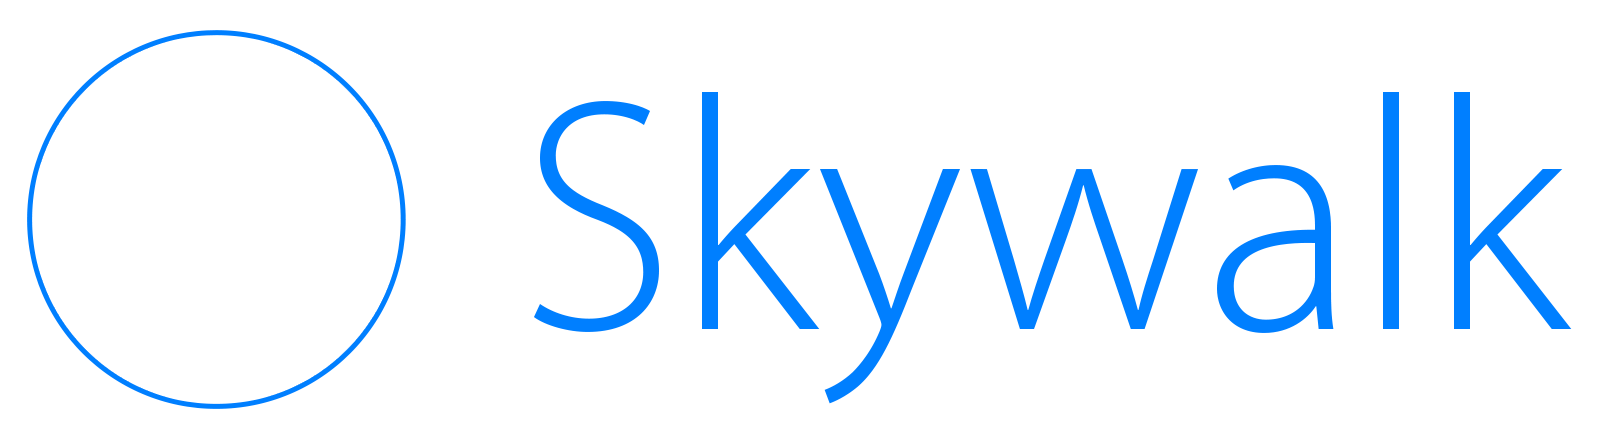 Skywalk logo